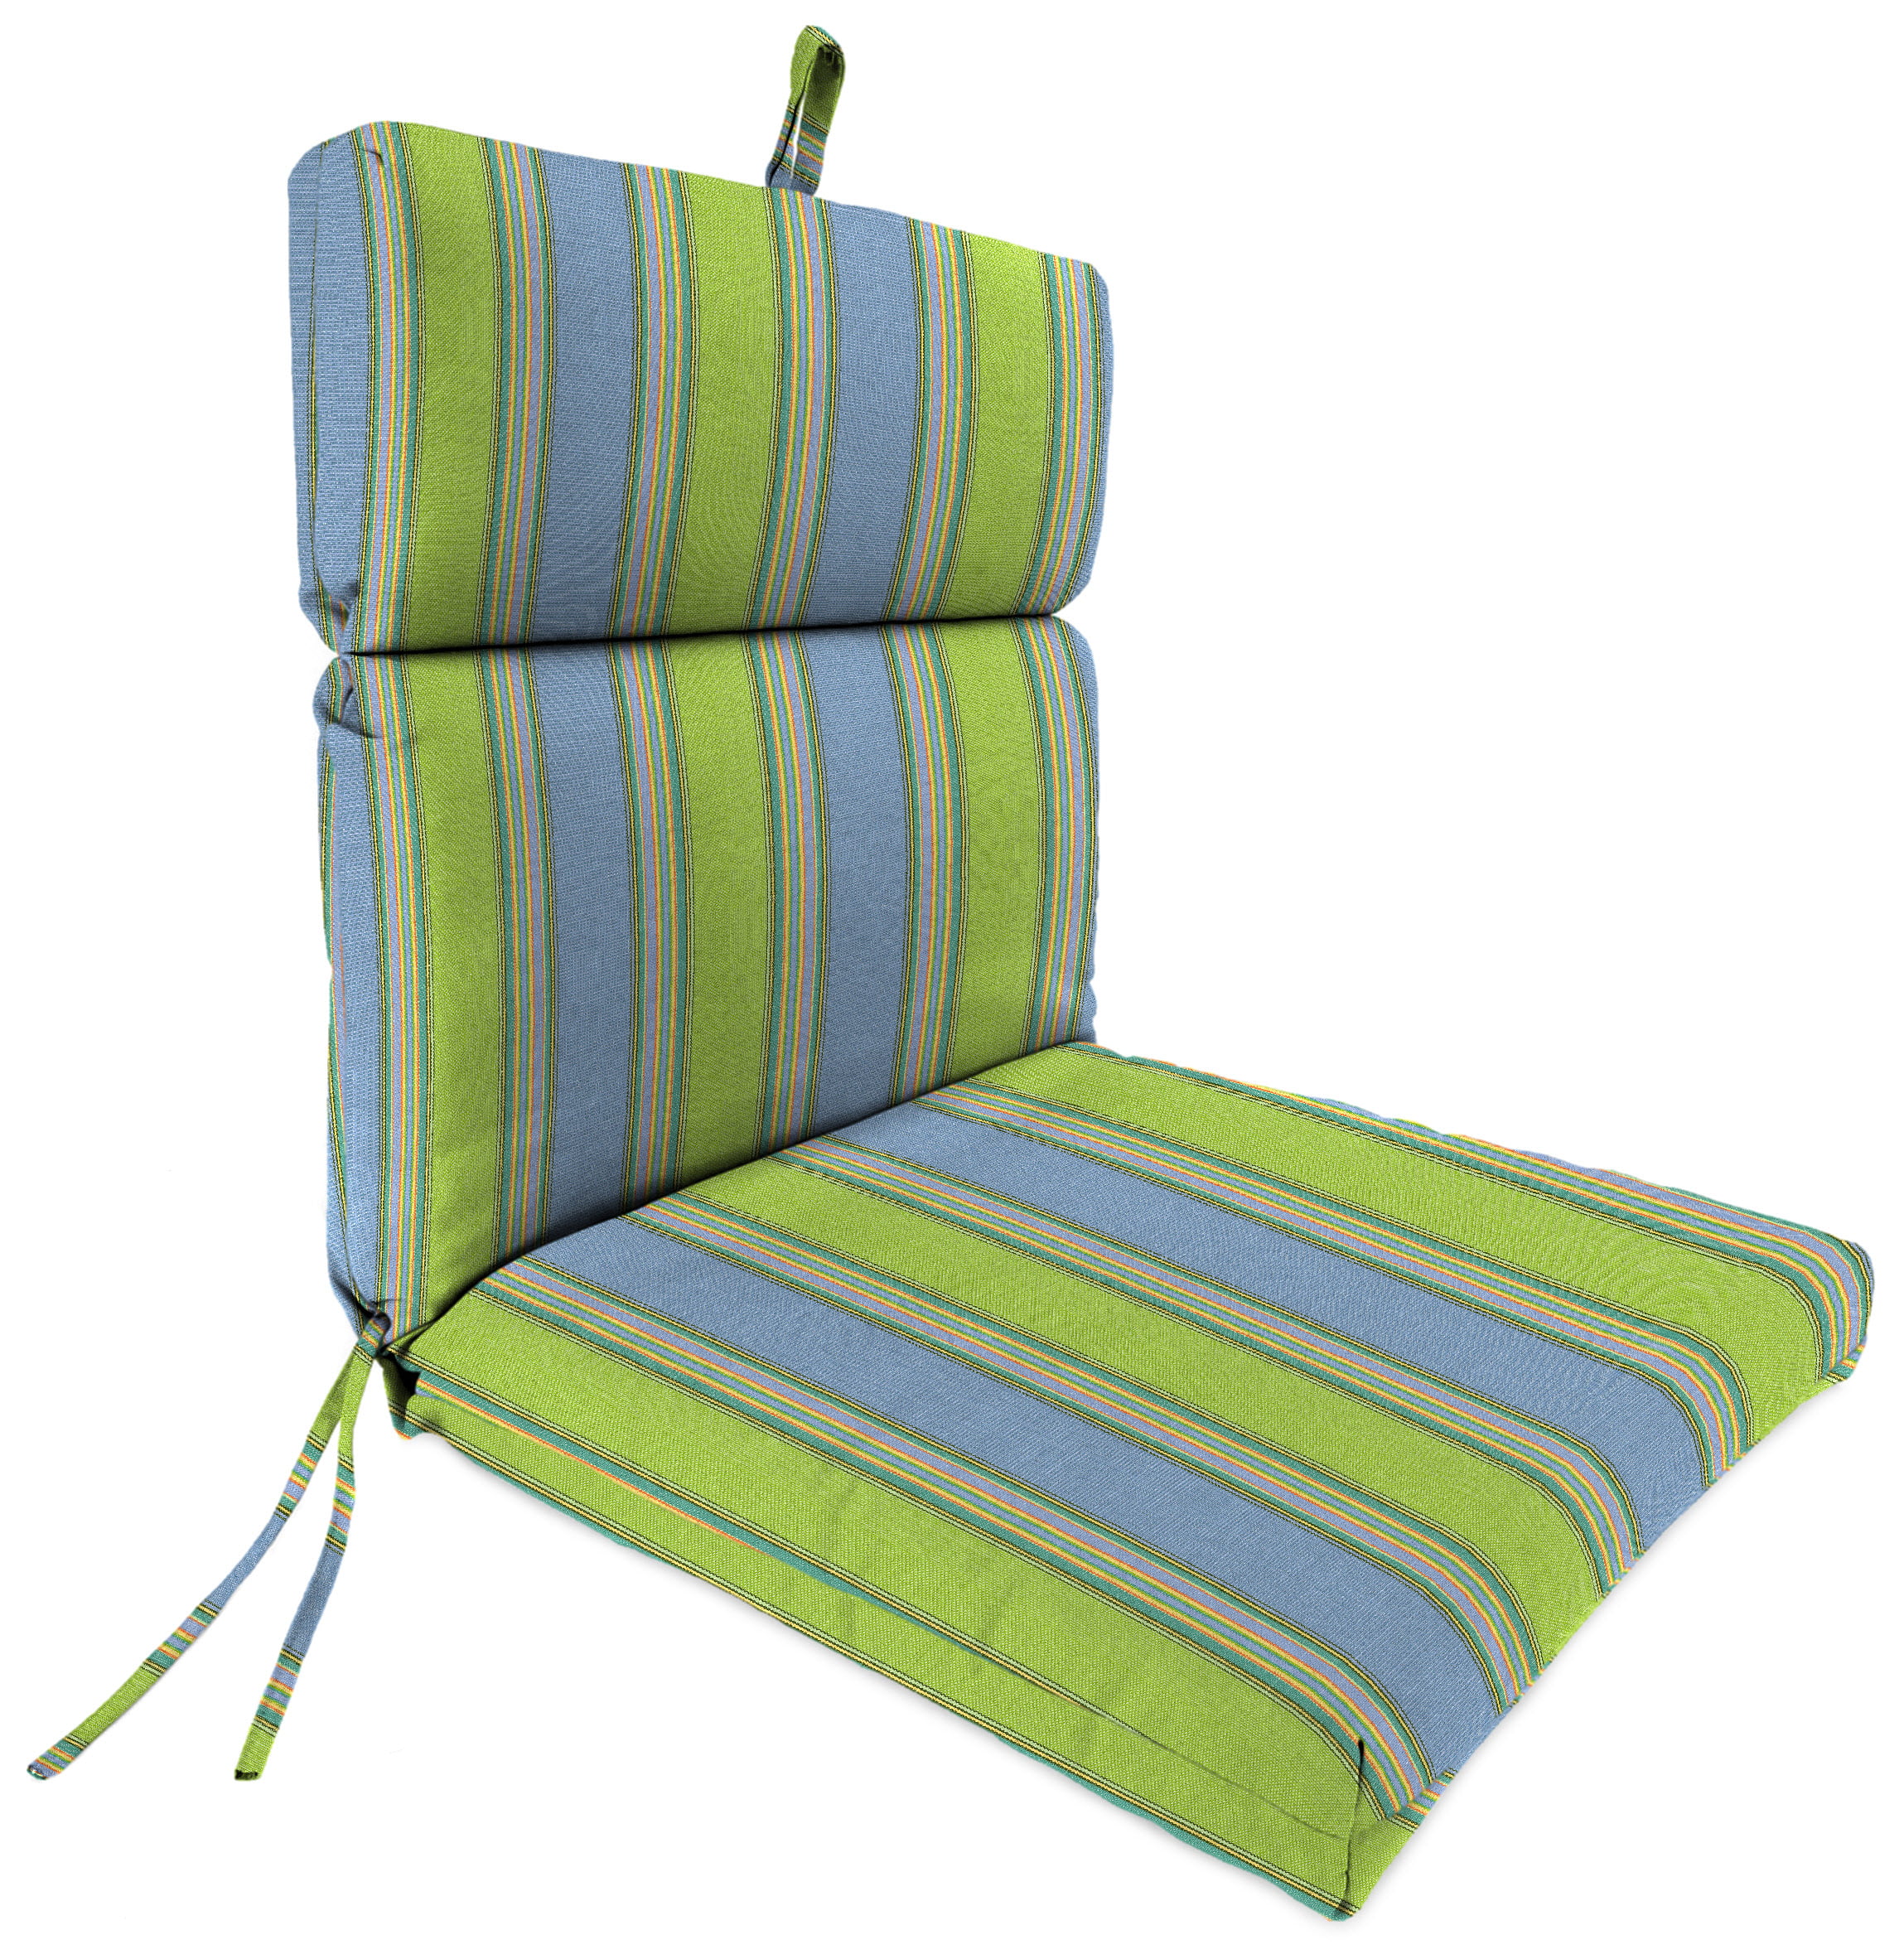 Sunbrella Bravada Outdoor Chair Cushion, Limelight Stripe, 44" L x 22